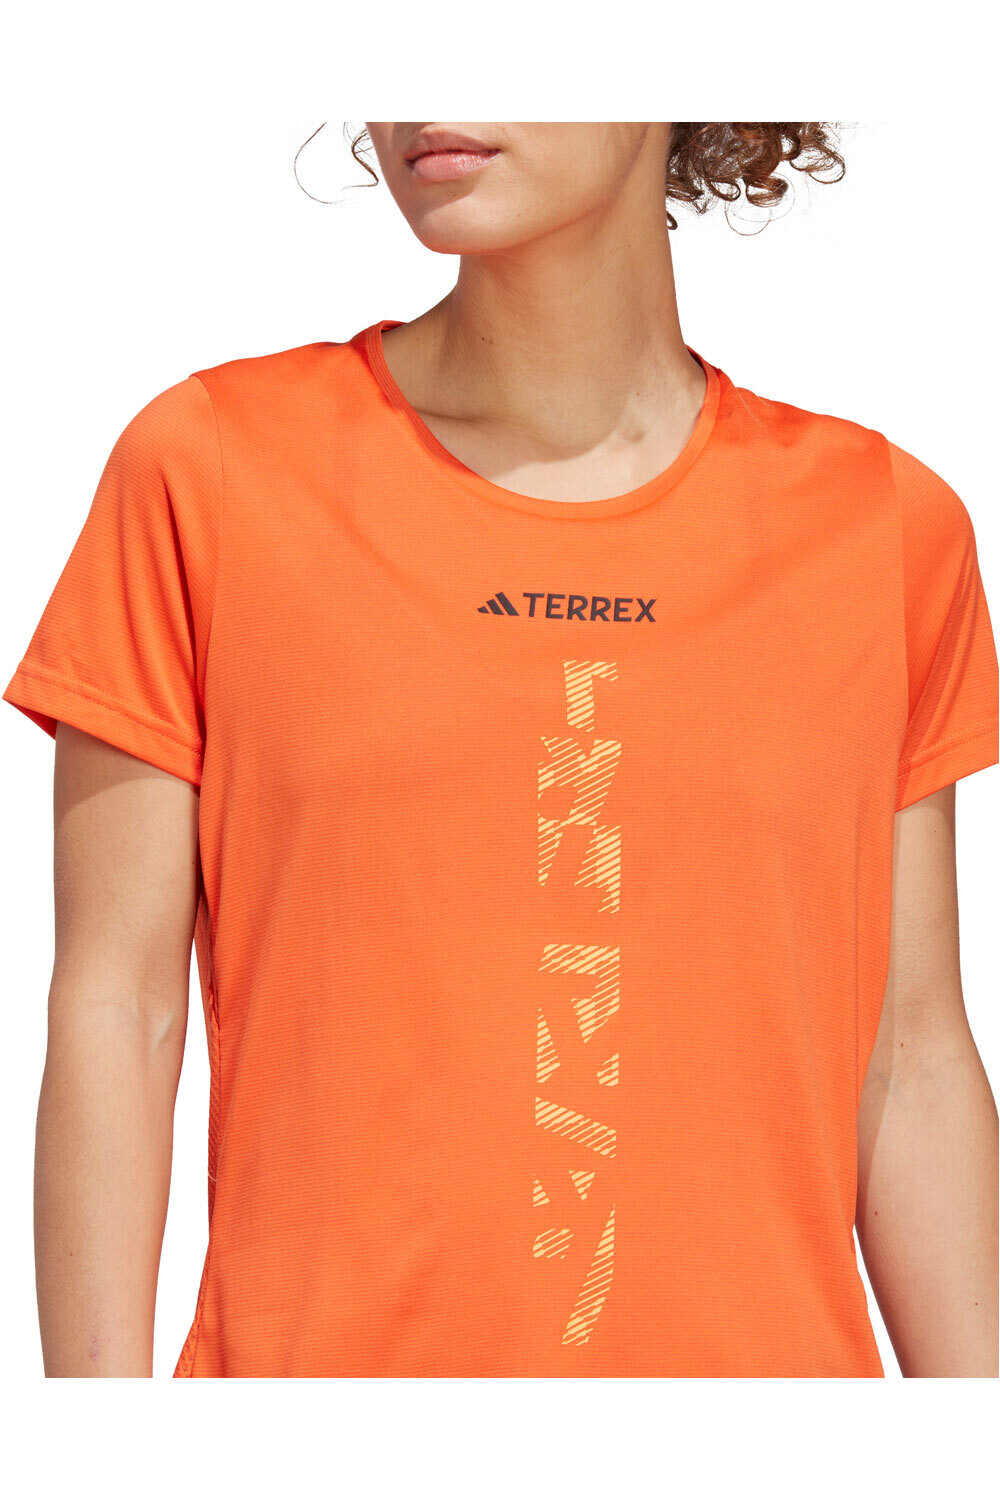 adidas camiseta entrenamiento manga corta mujer Terrex Agravic Trail Running vista detalle